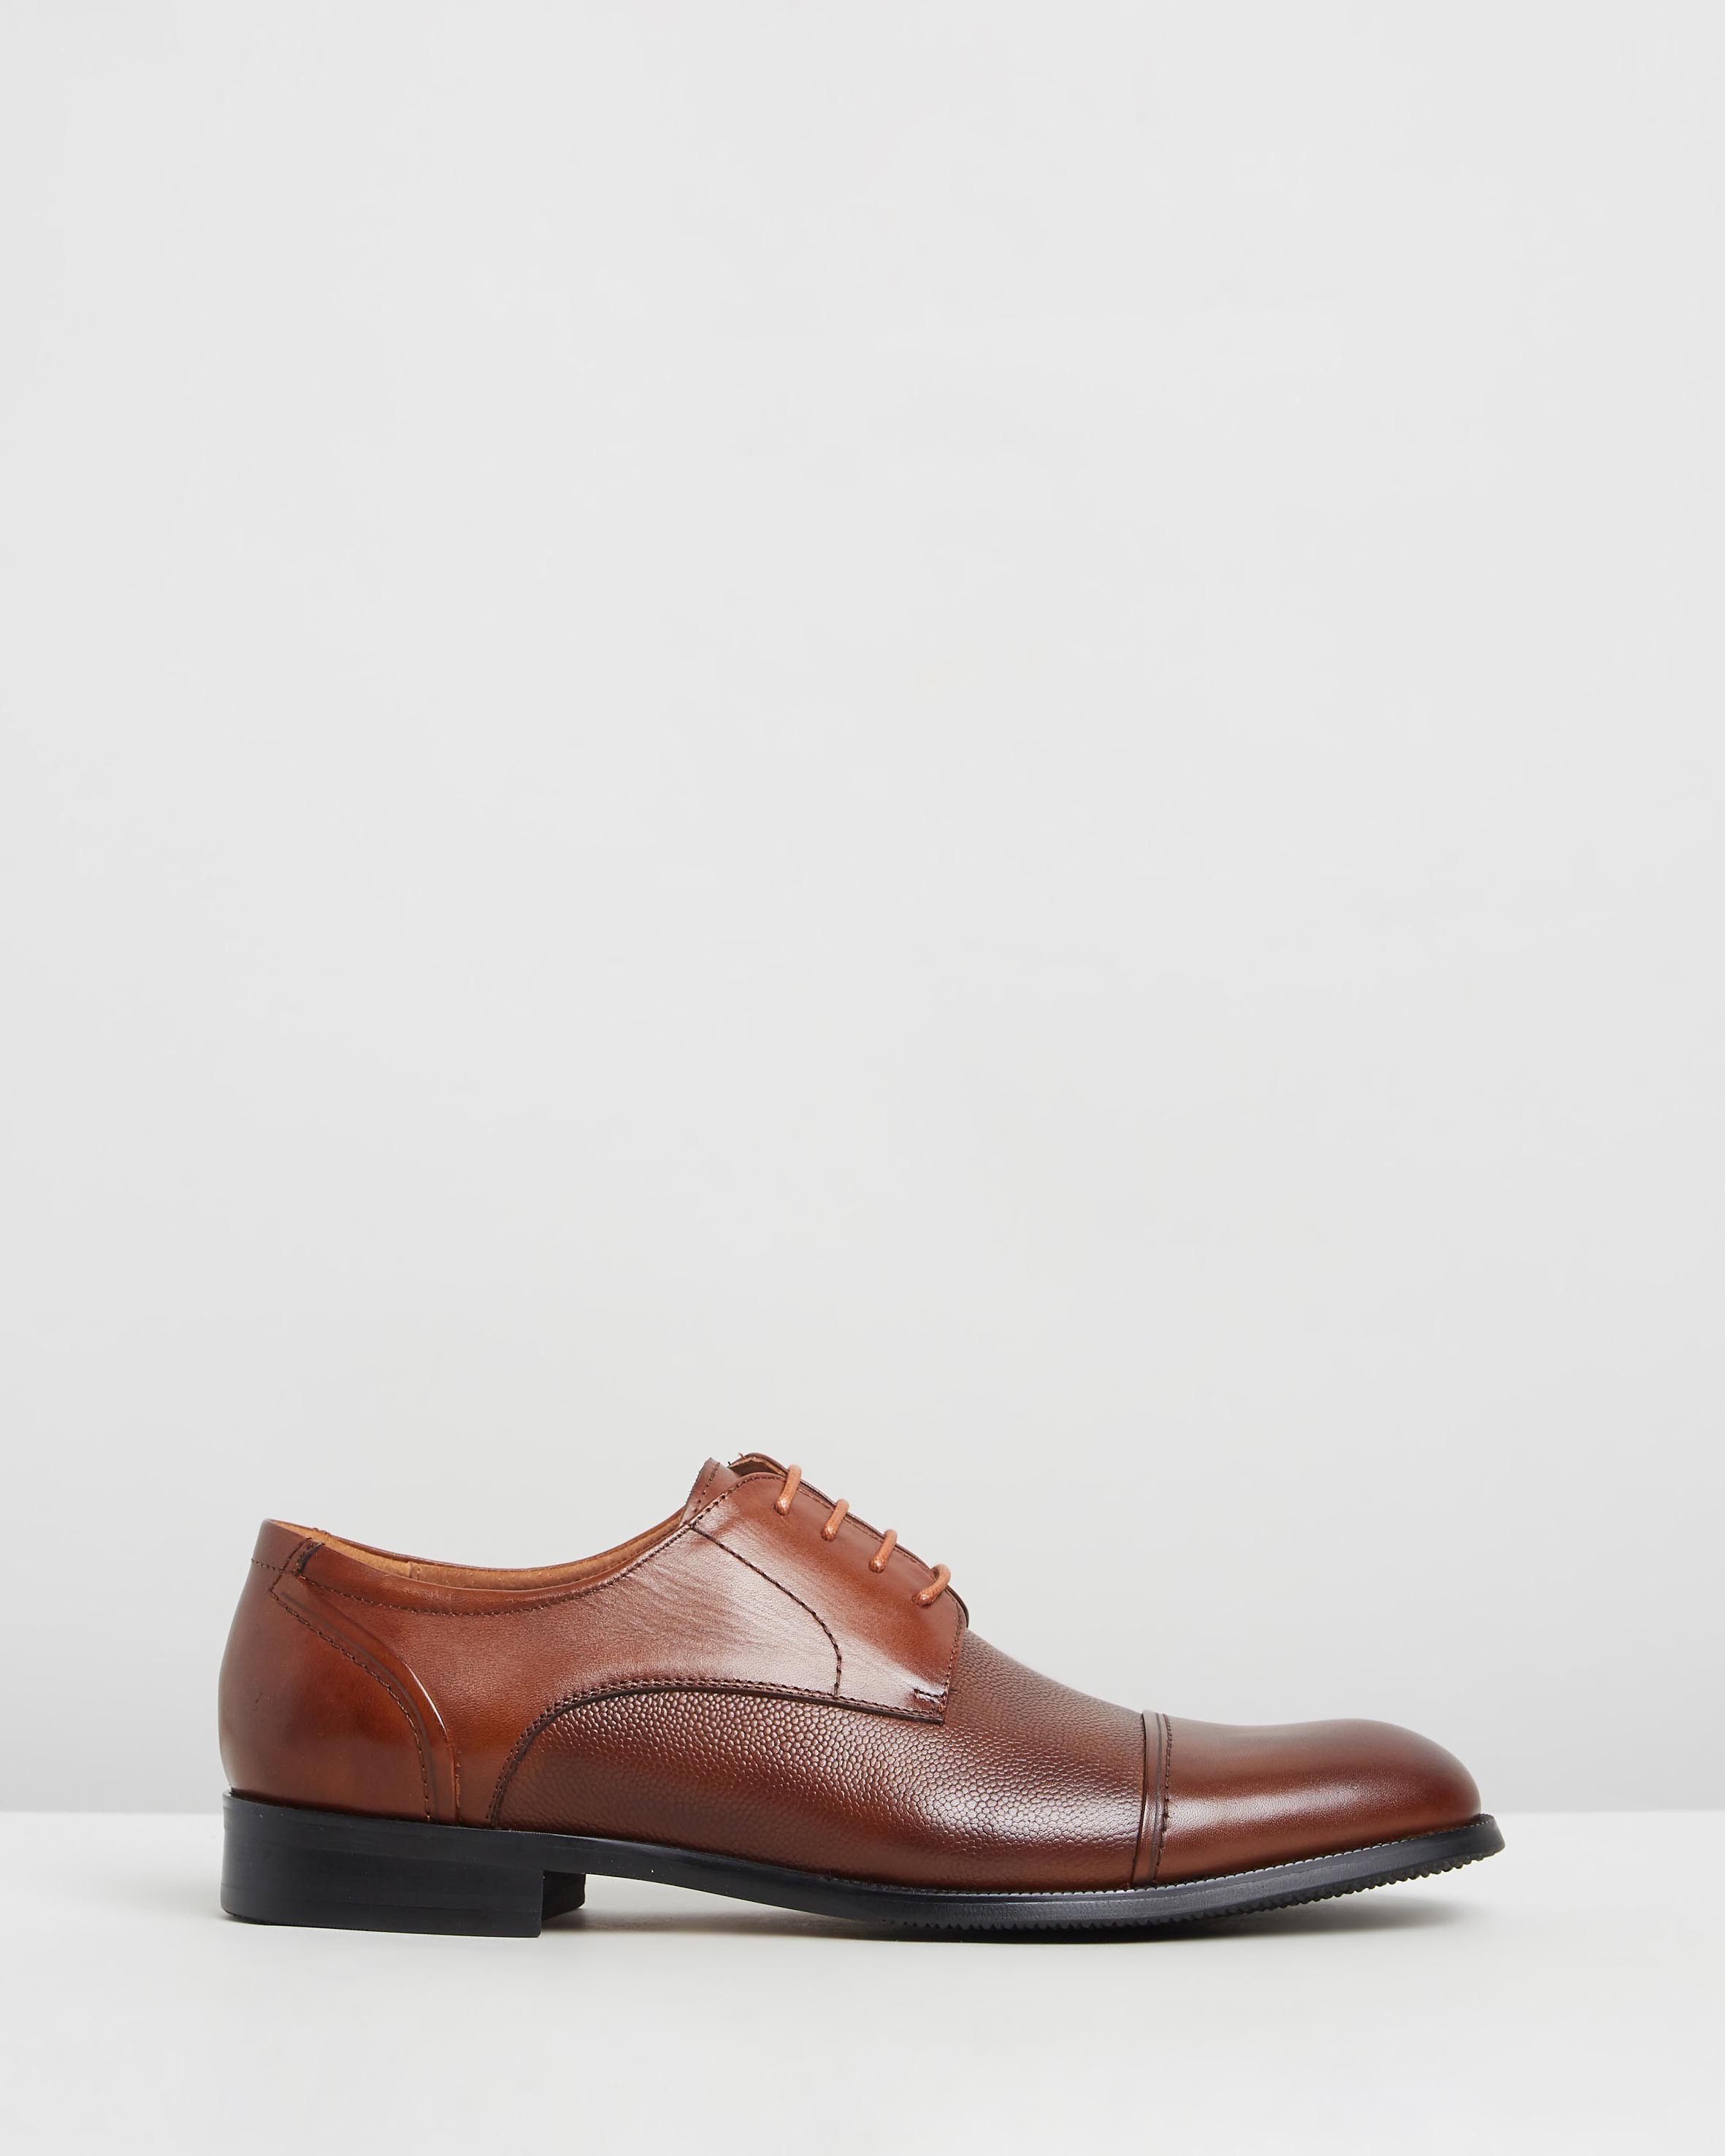 Malcolm Leather Derby Shoes Tan by Double Oak Mills | ShoeSales